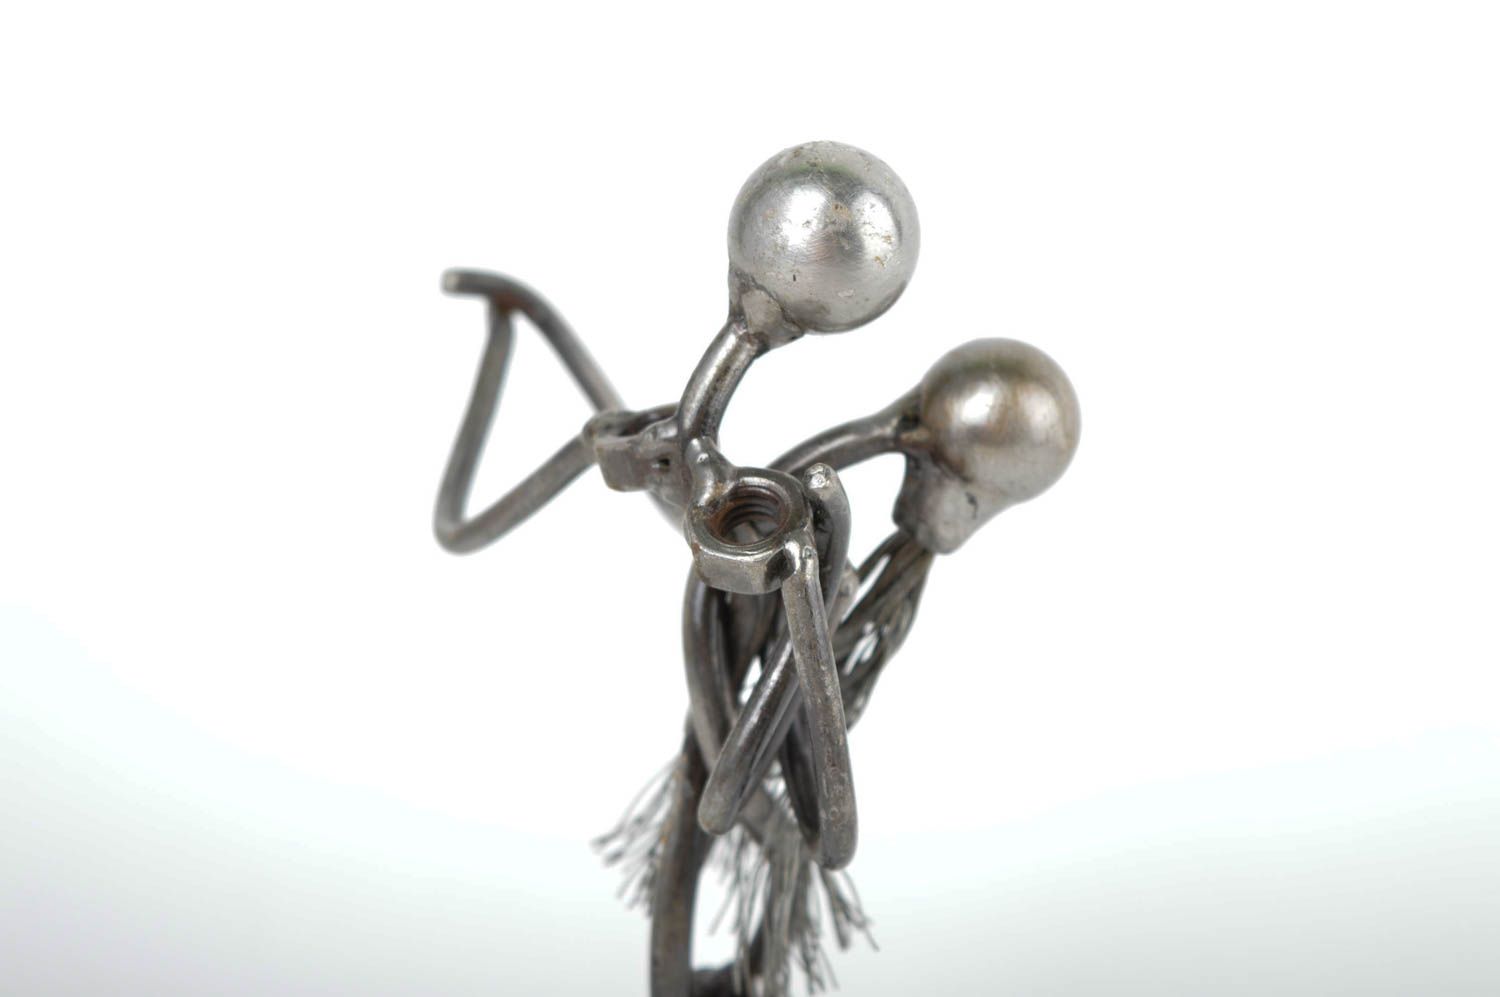 Unusual handmade figurine romantic metal figurine gift ideas decorative use only photo 4